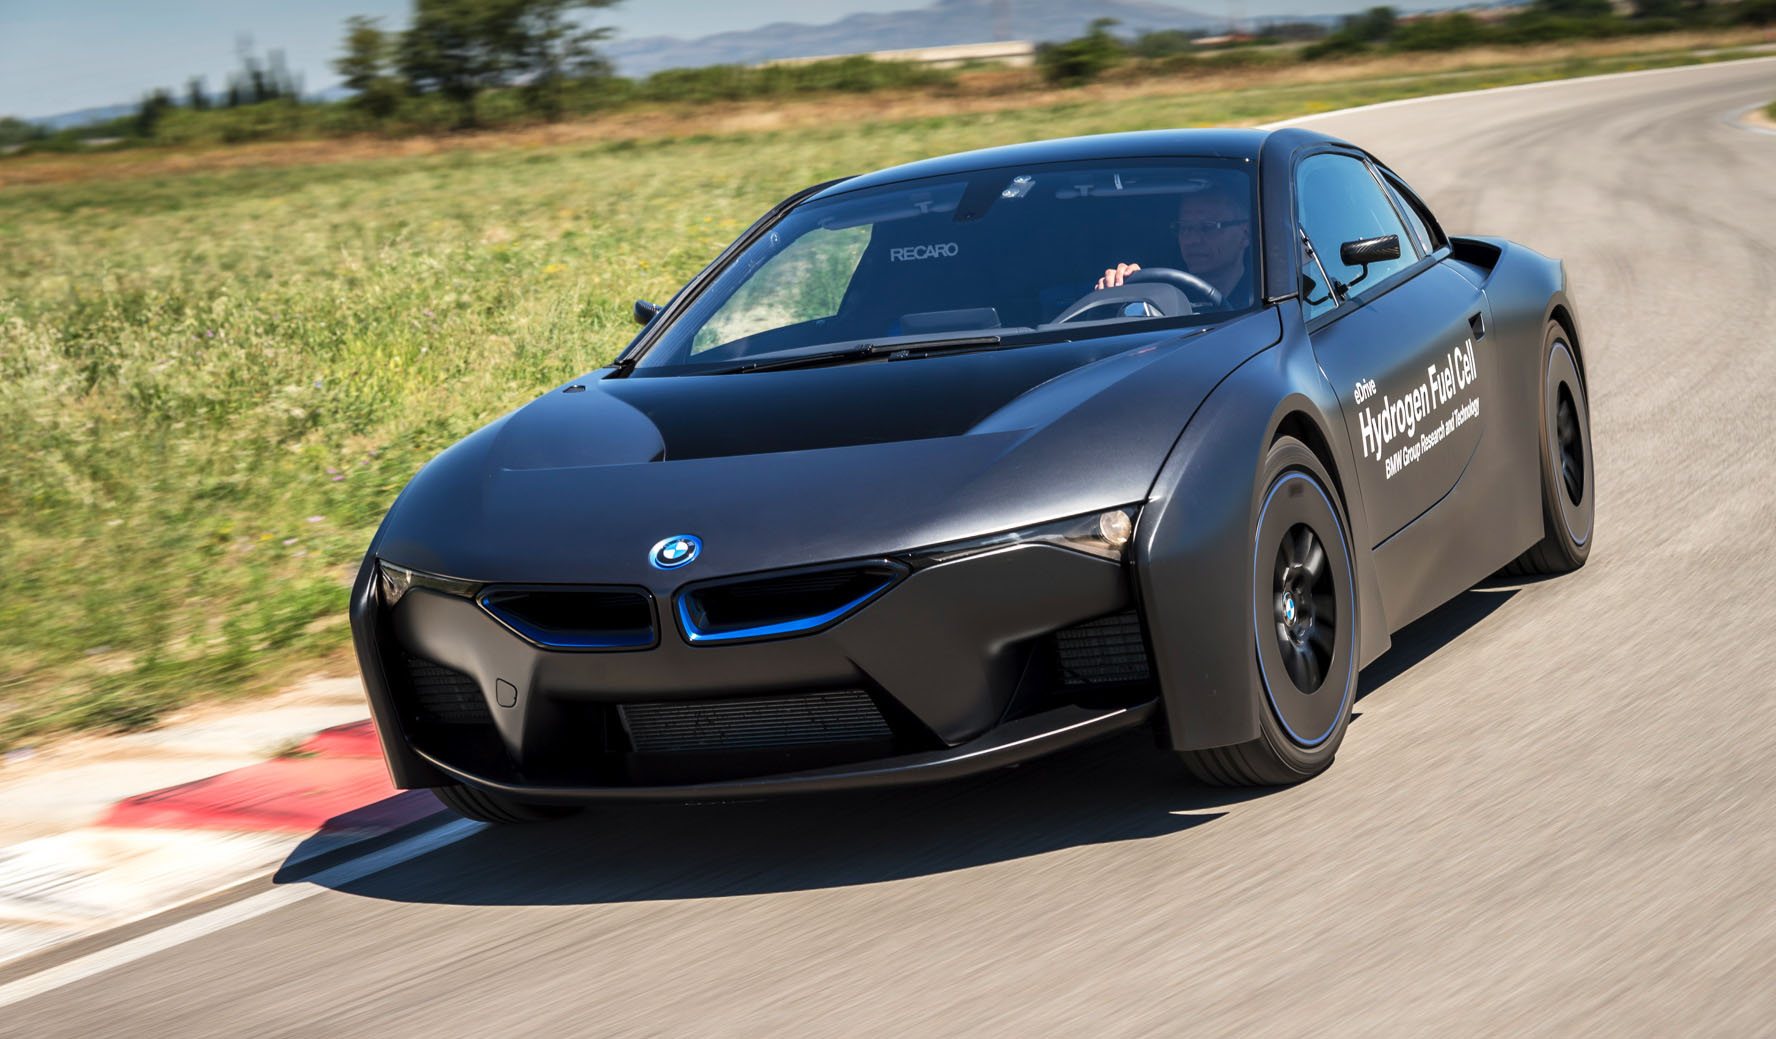 BMW-i8-hydrogen-fuel-cell-images-09